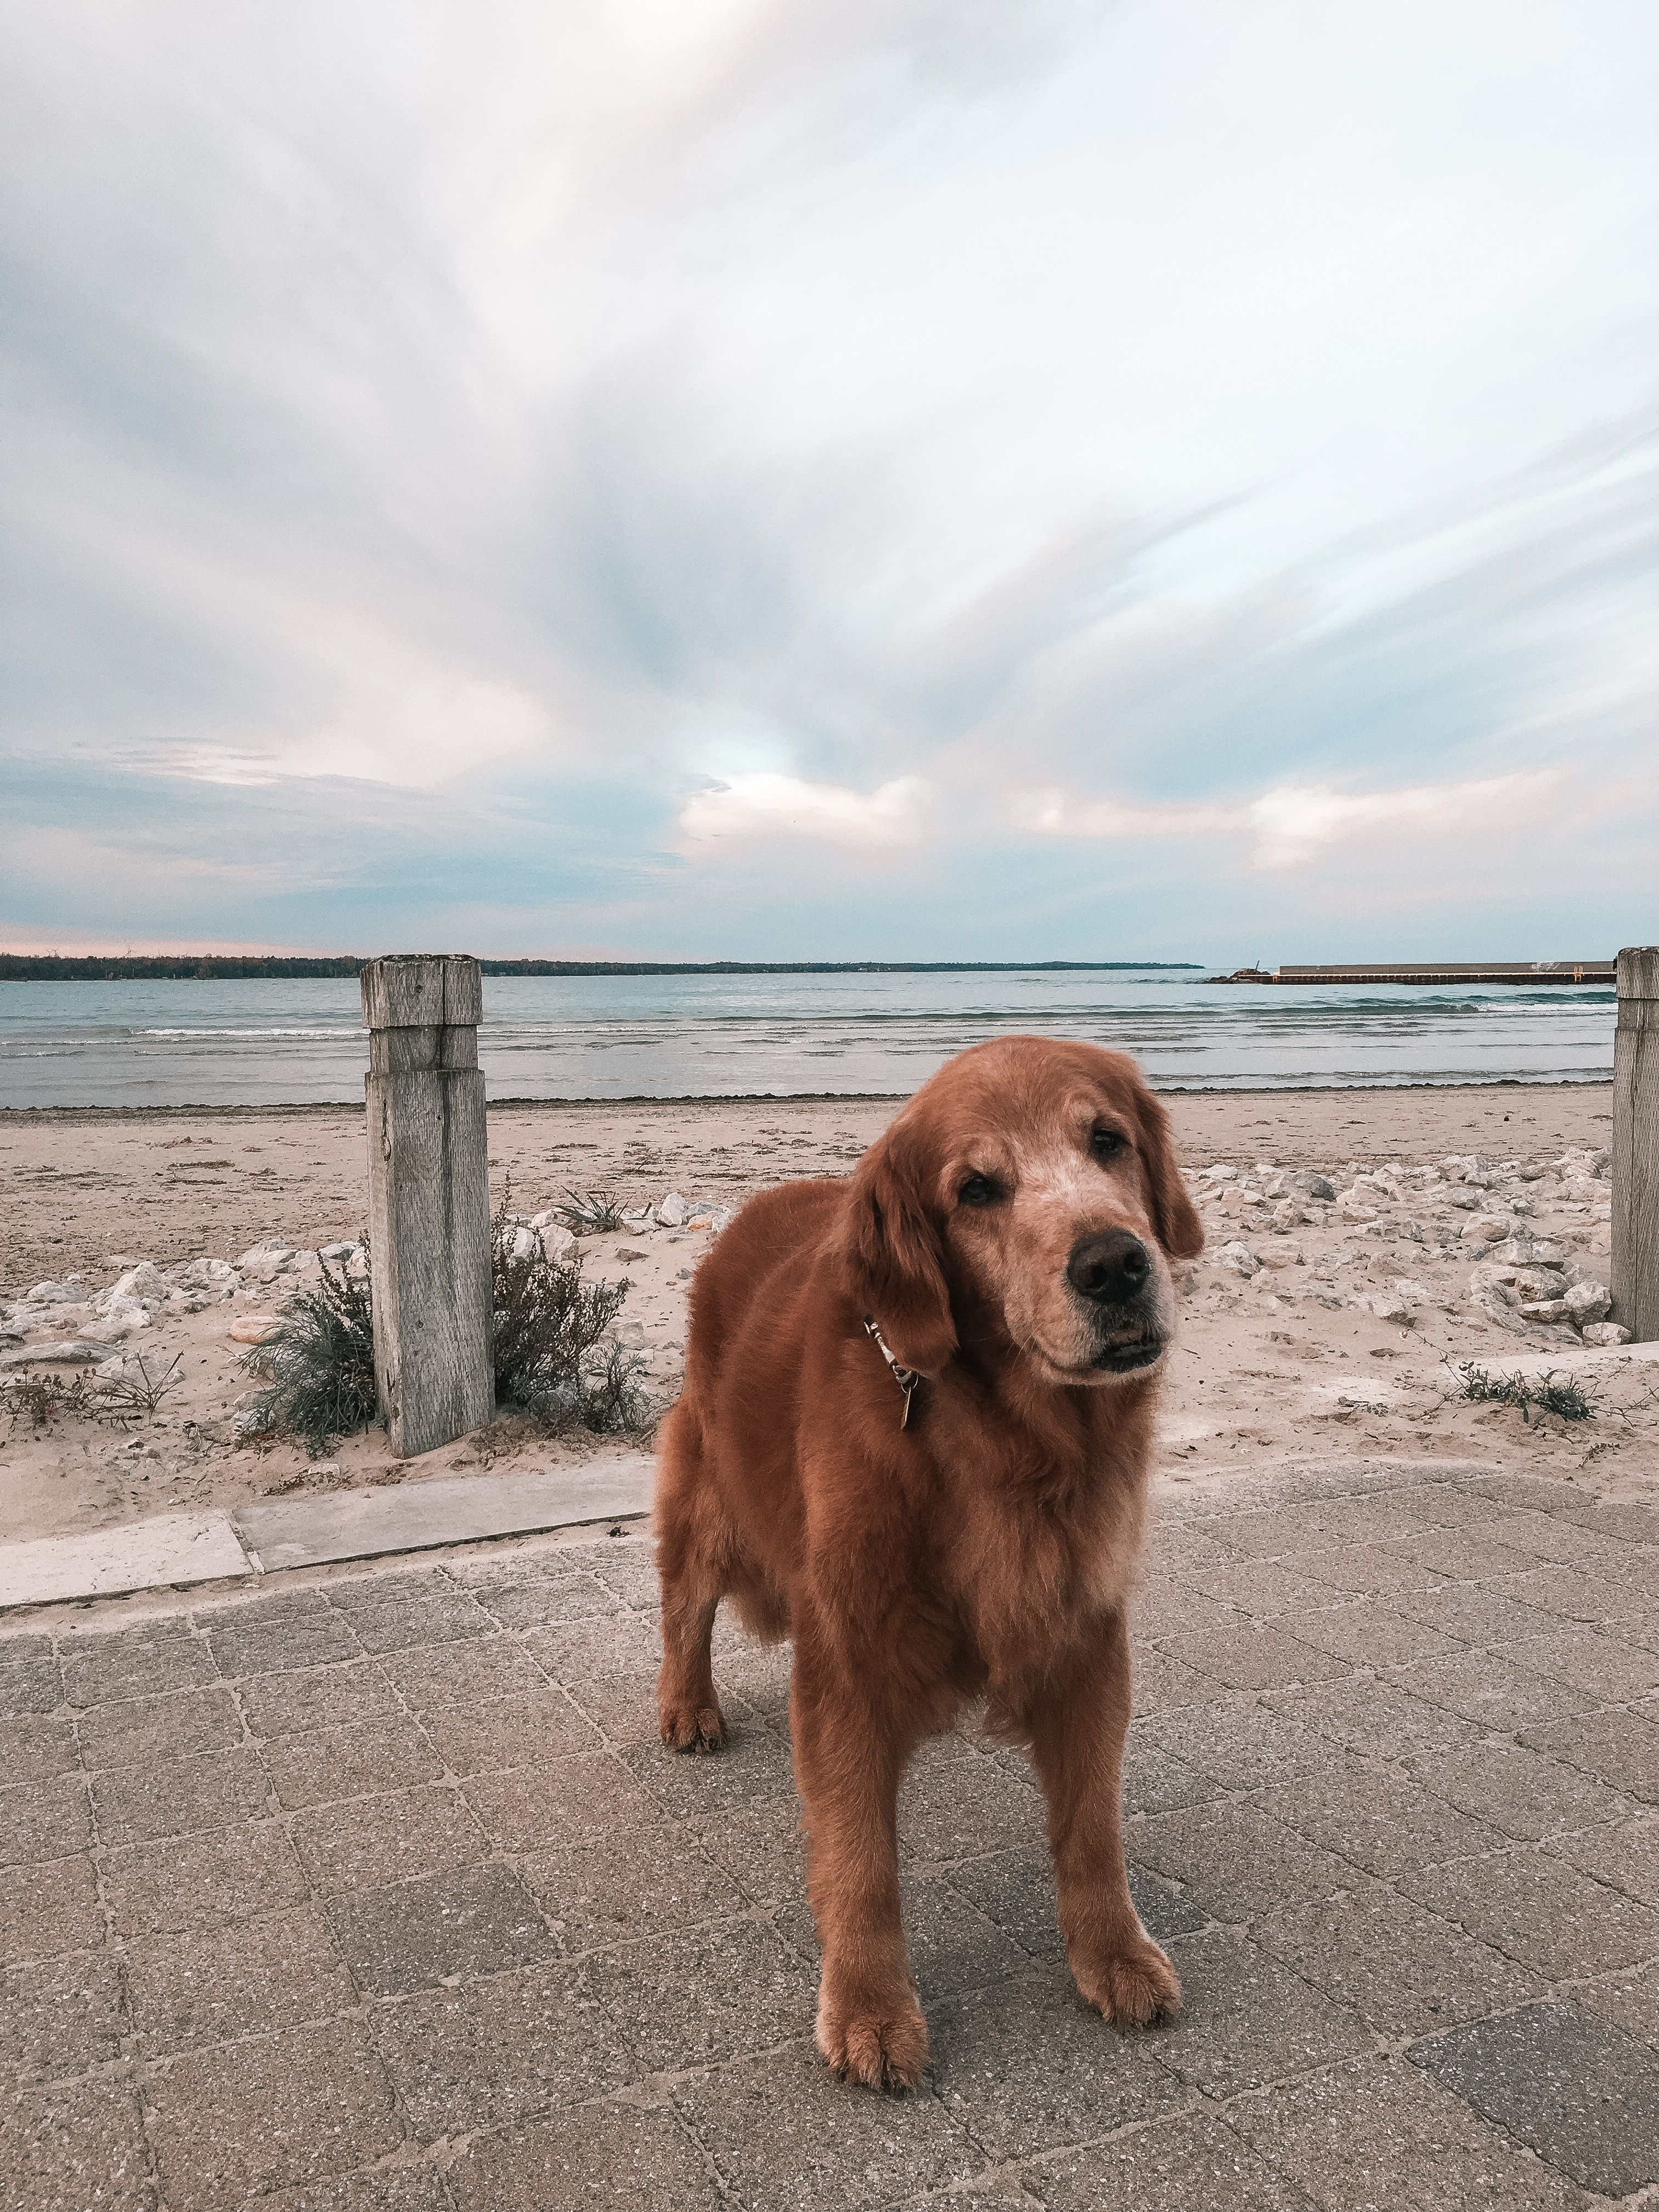 A Golden Retriever dog at the beach.